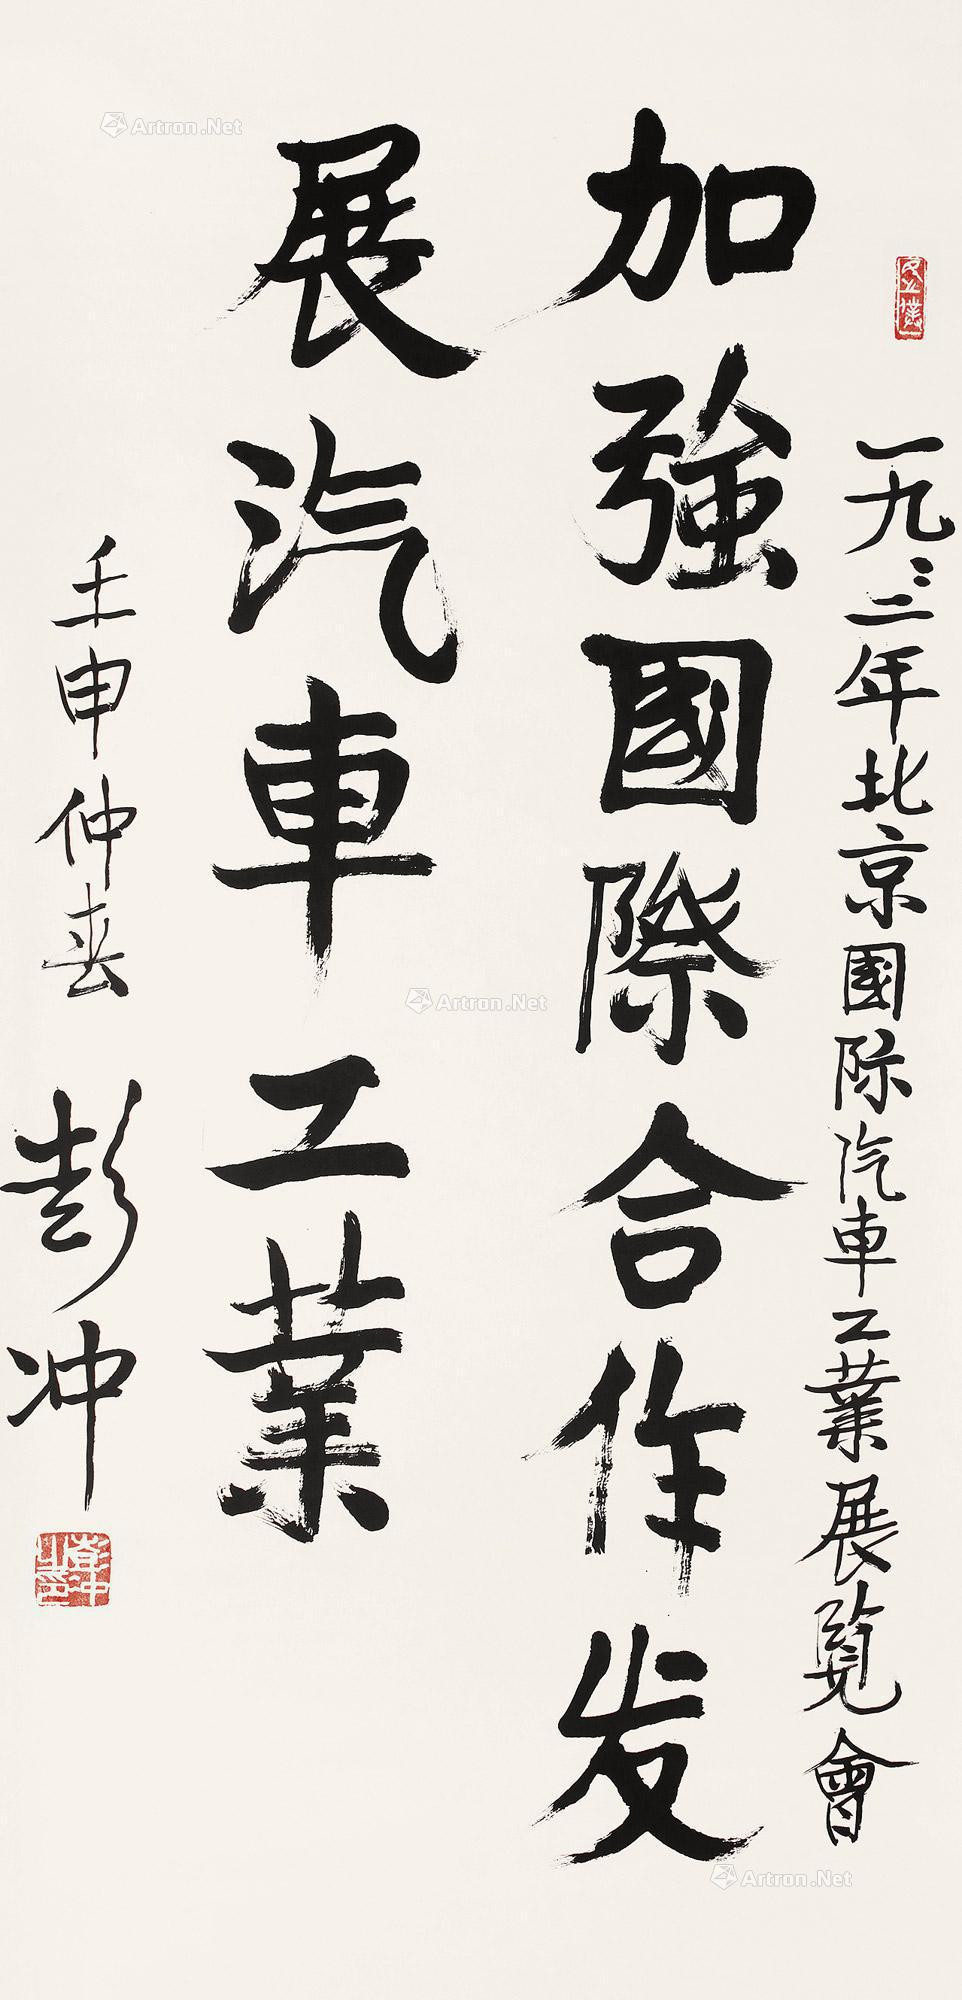 Calligraphy by Peng Chong